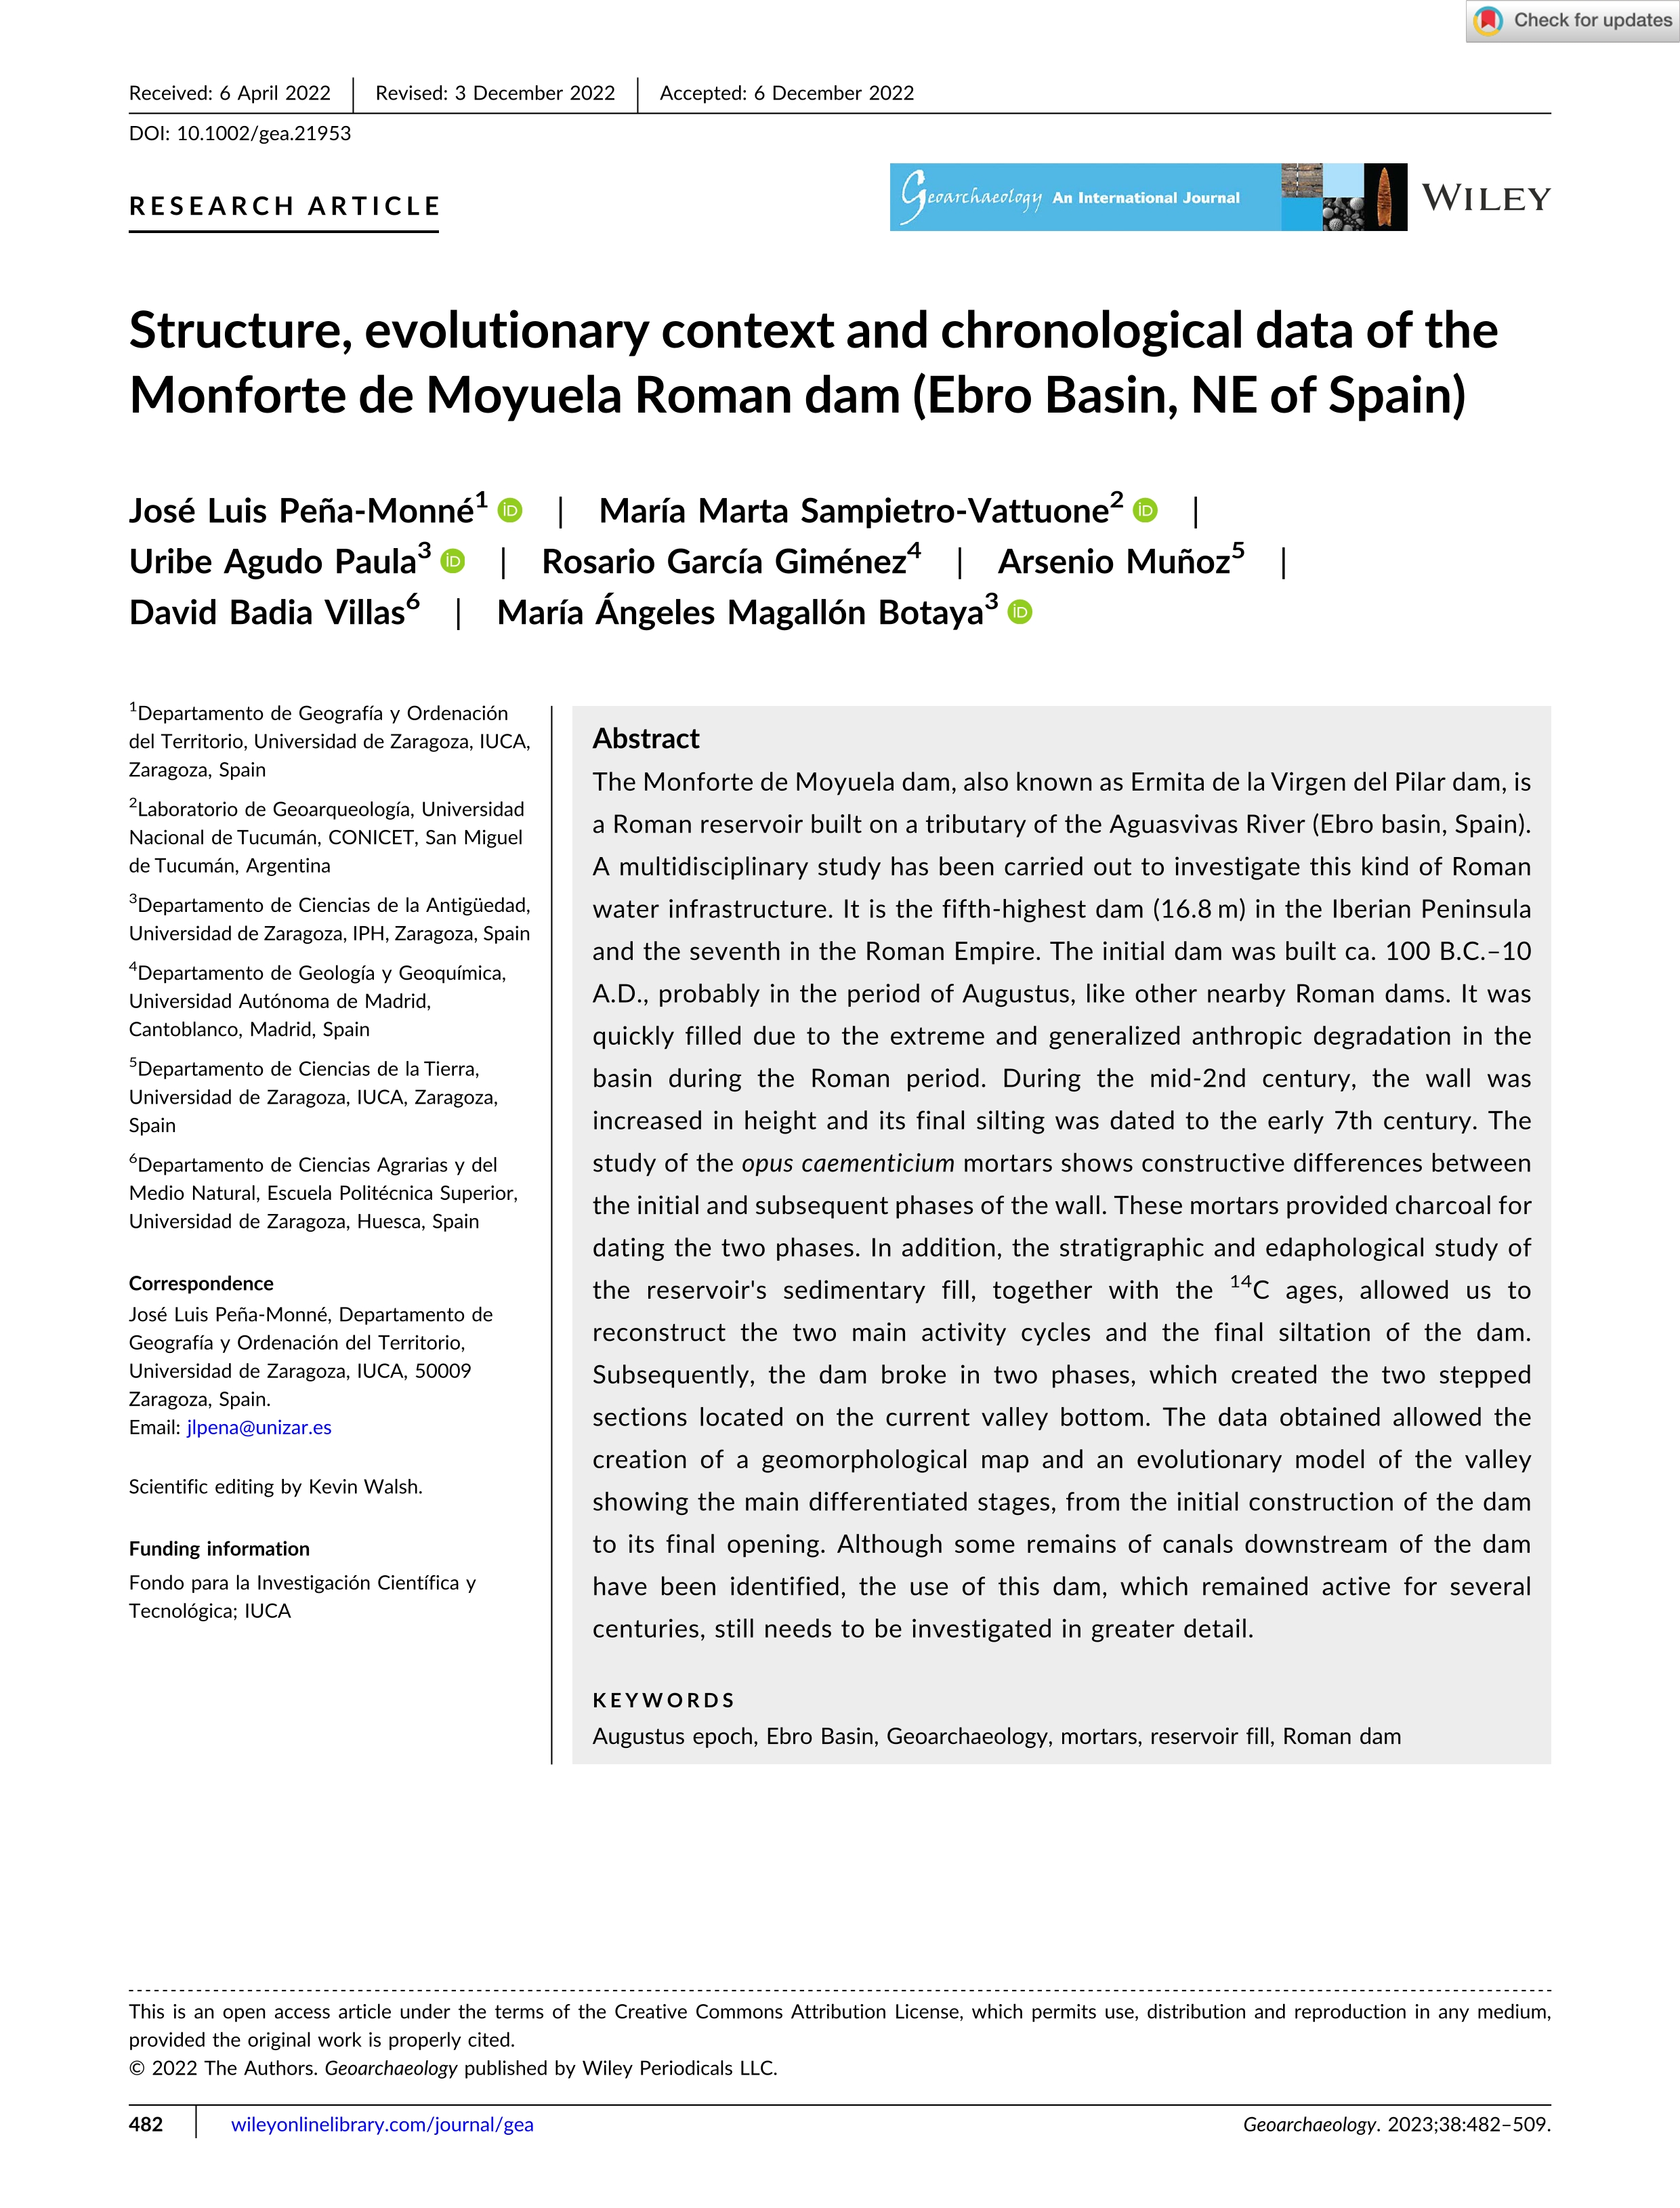 Structure, evolutionary context and chronological data of the Monforte de Moyuela Roman dam (Ebro Basin, NE of Spain)